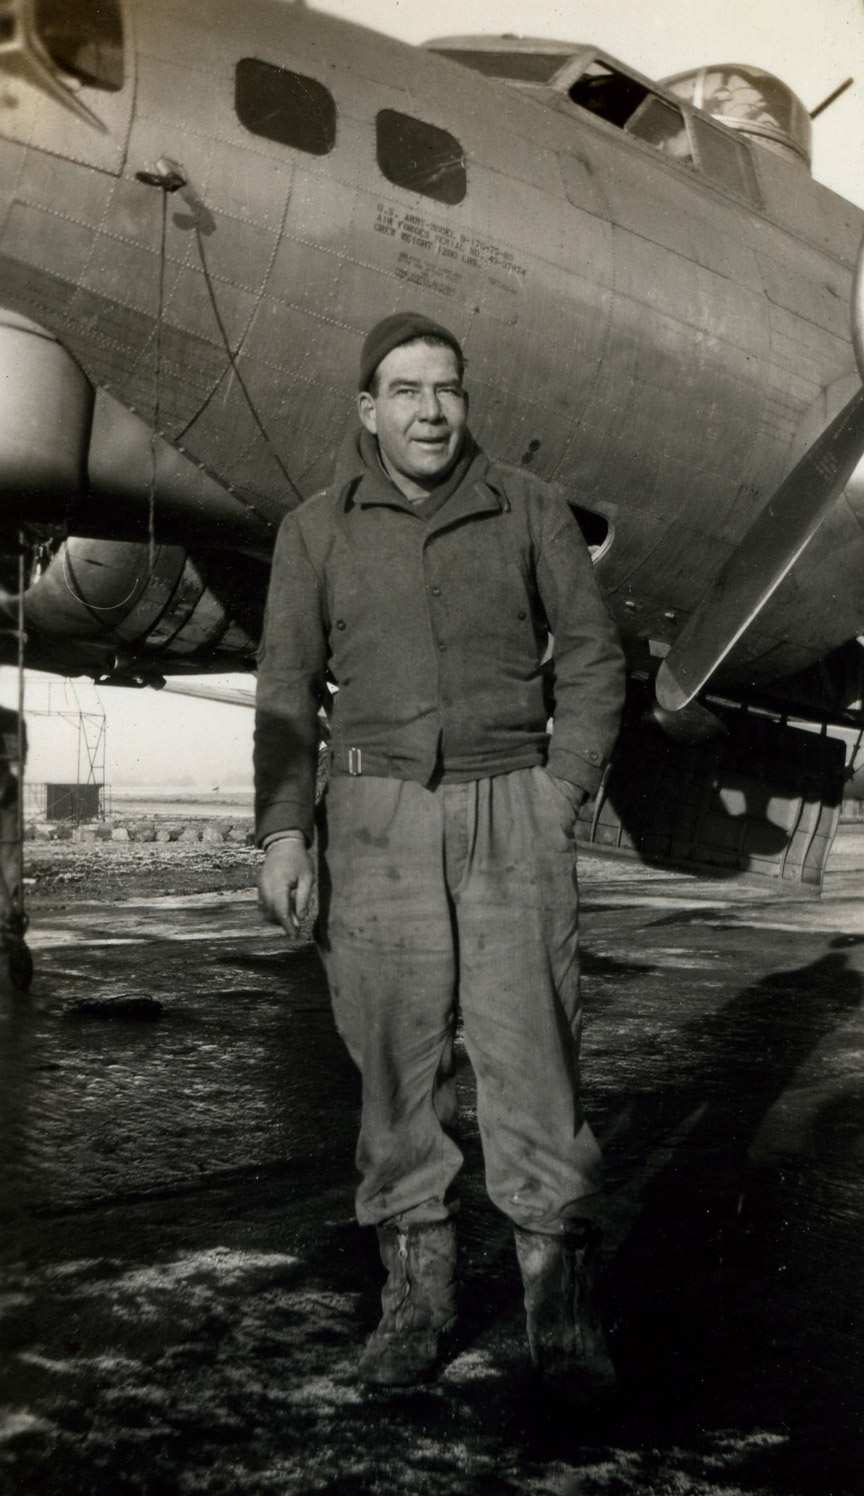 Ground Crewman with Georgia Peach - 1944/45